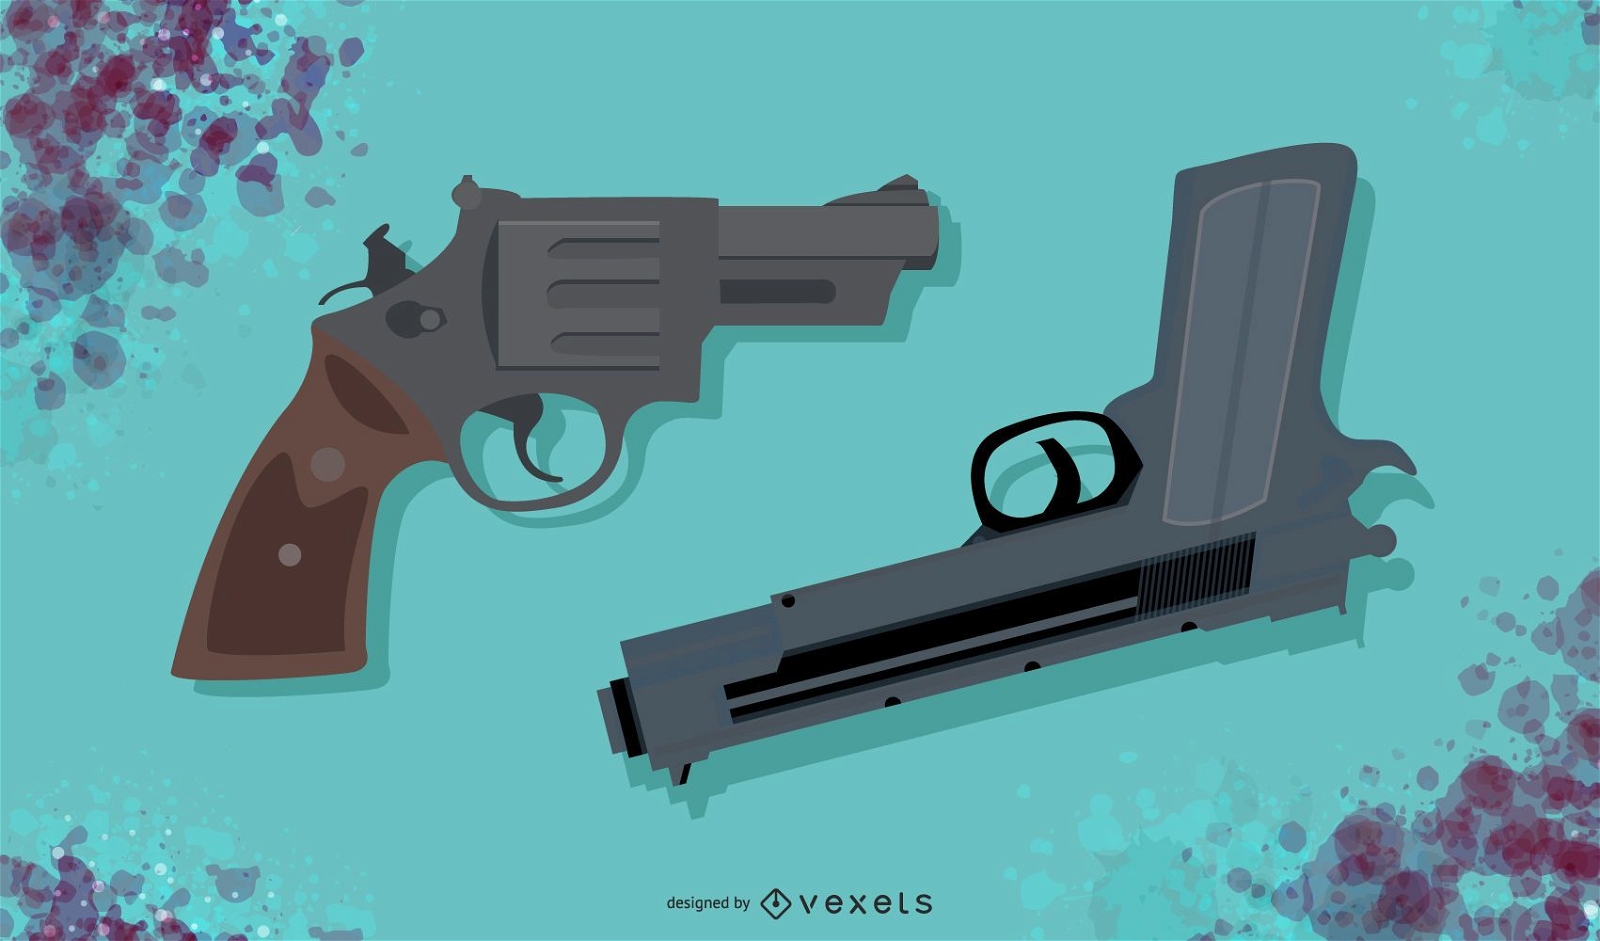 3D gun illustration set